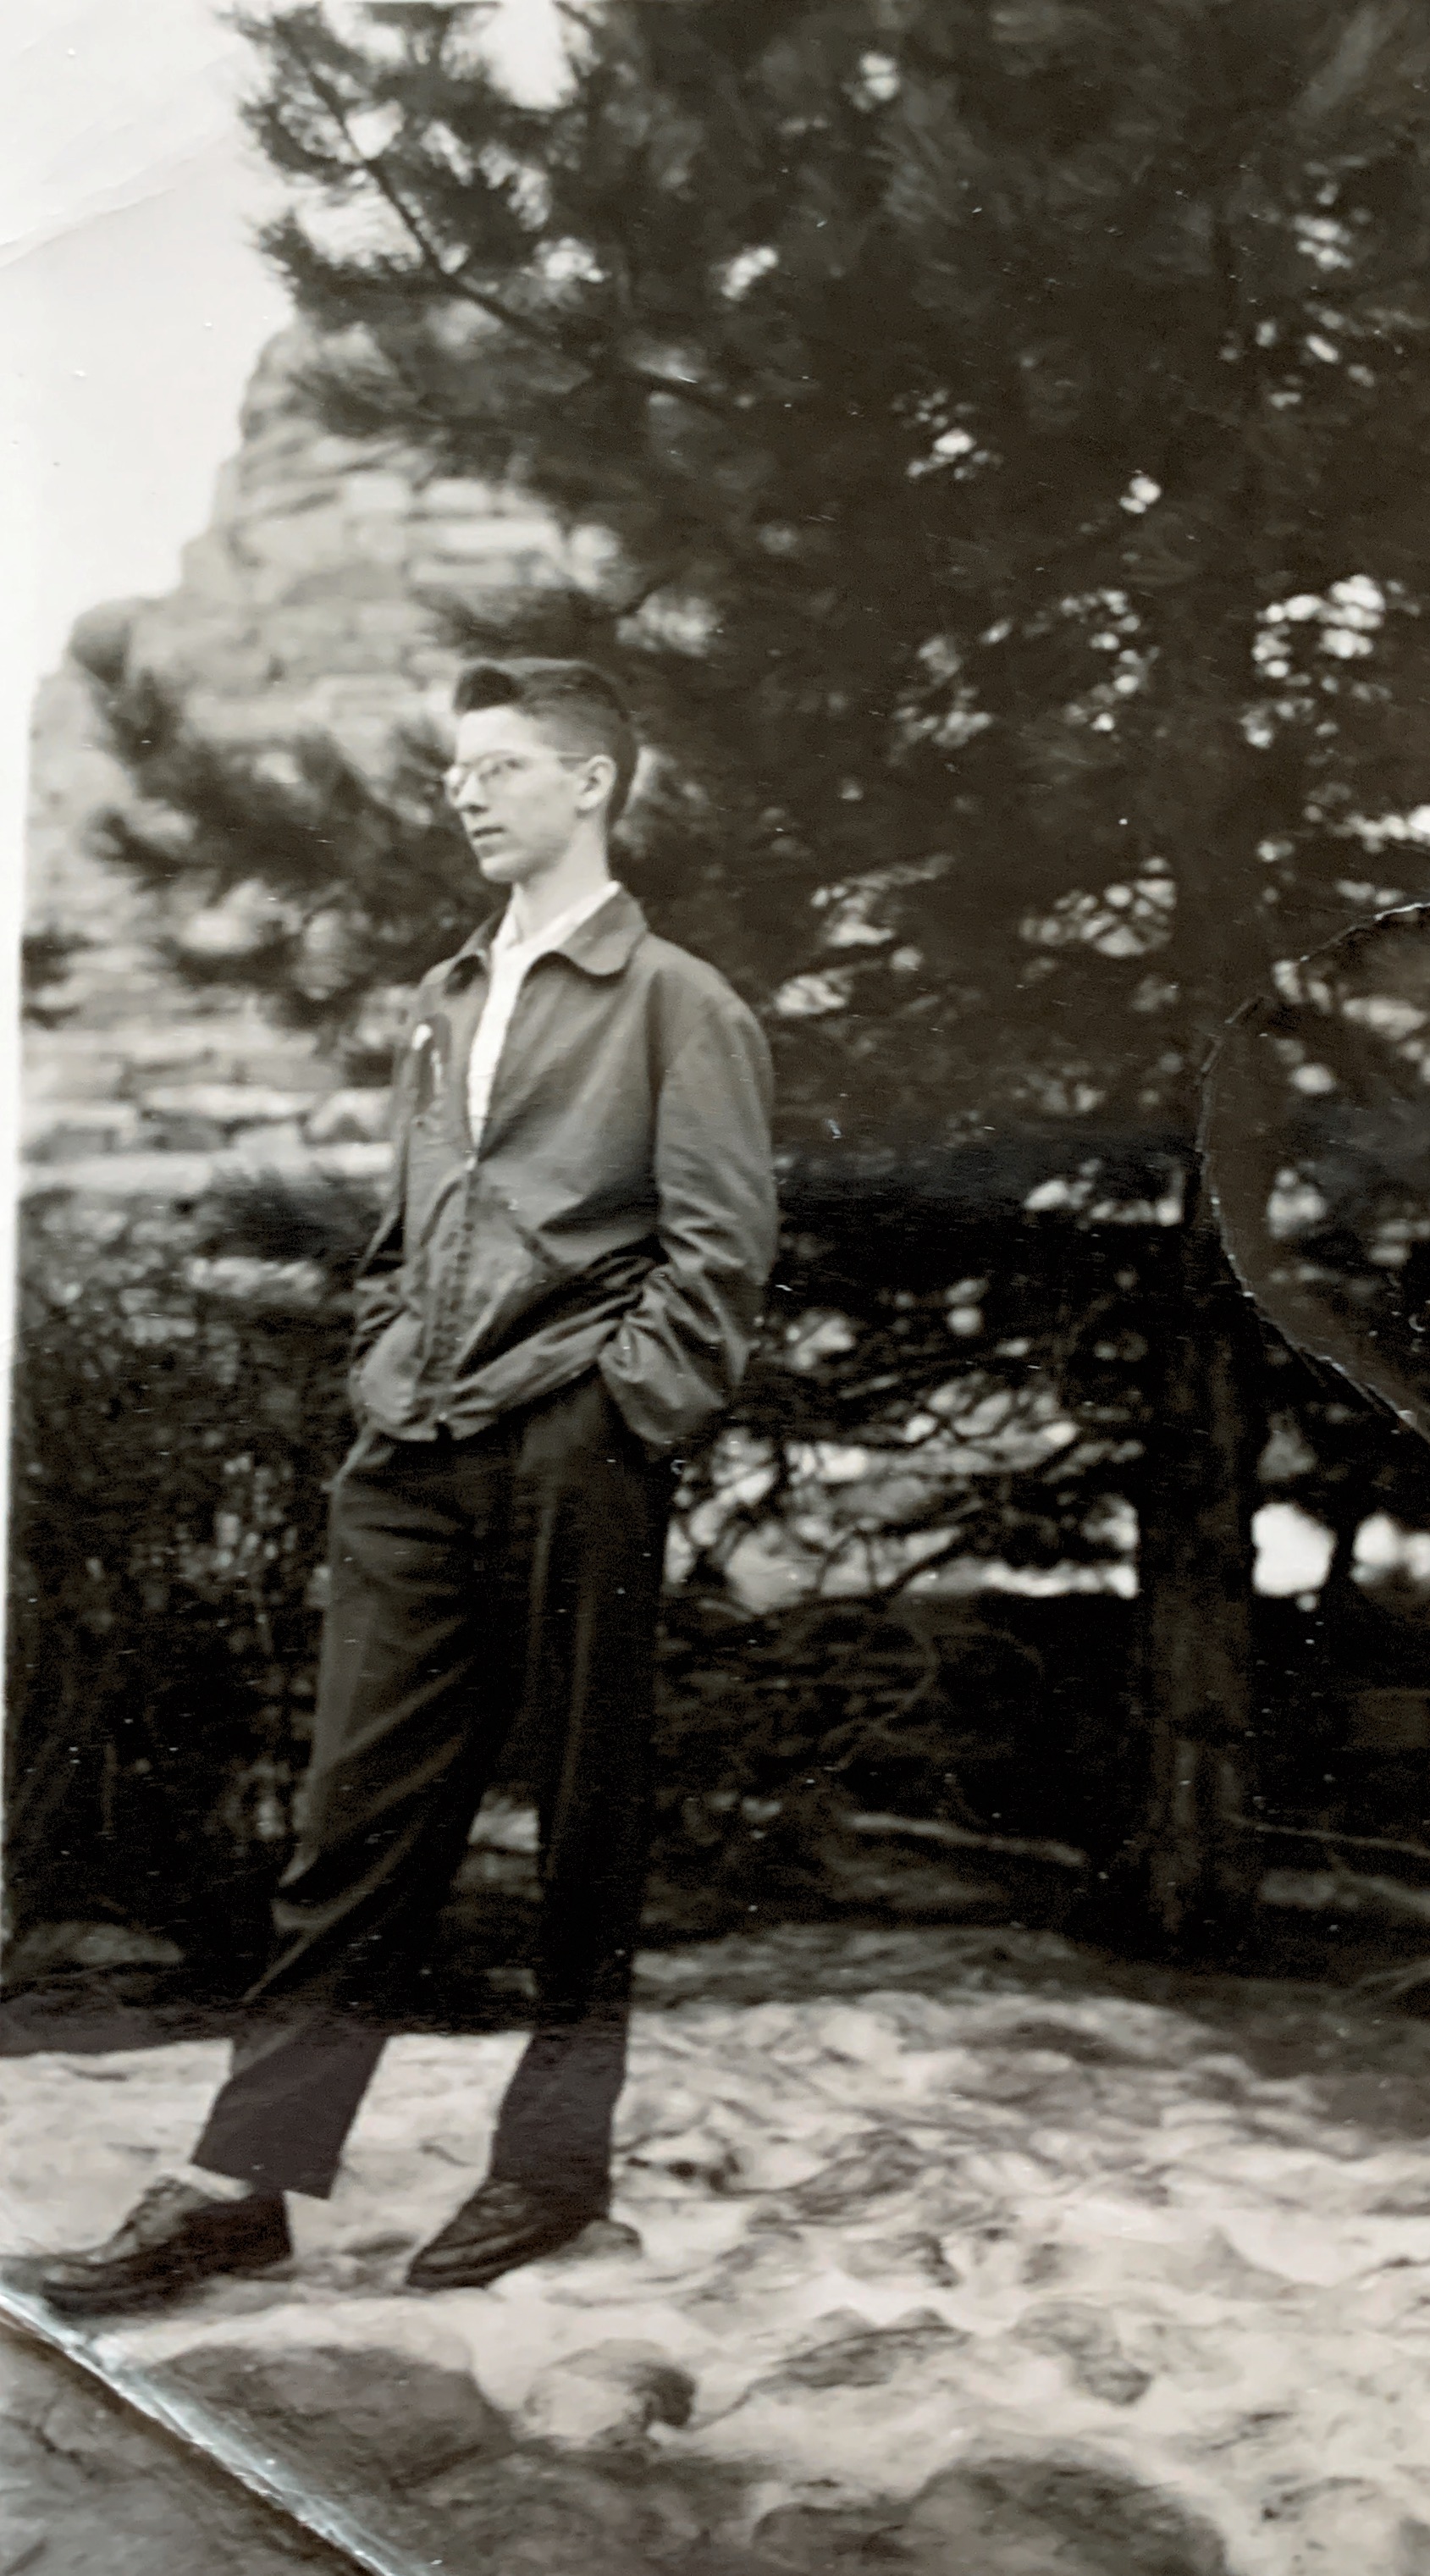 Dick Kasper at Washington Park, spring 1947